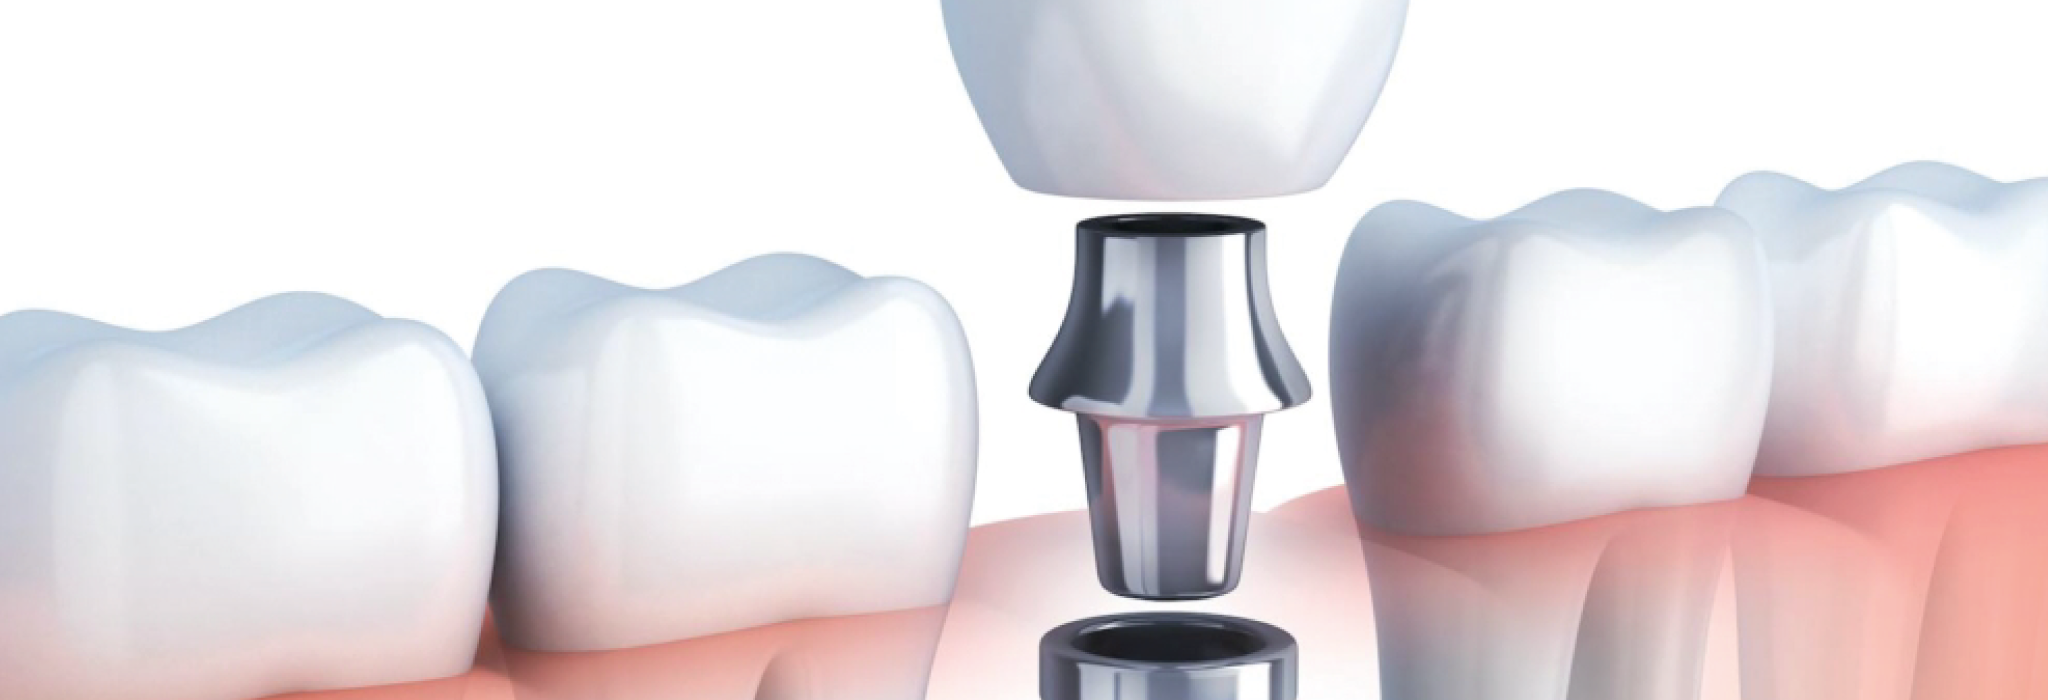 Implantes-dentales-2